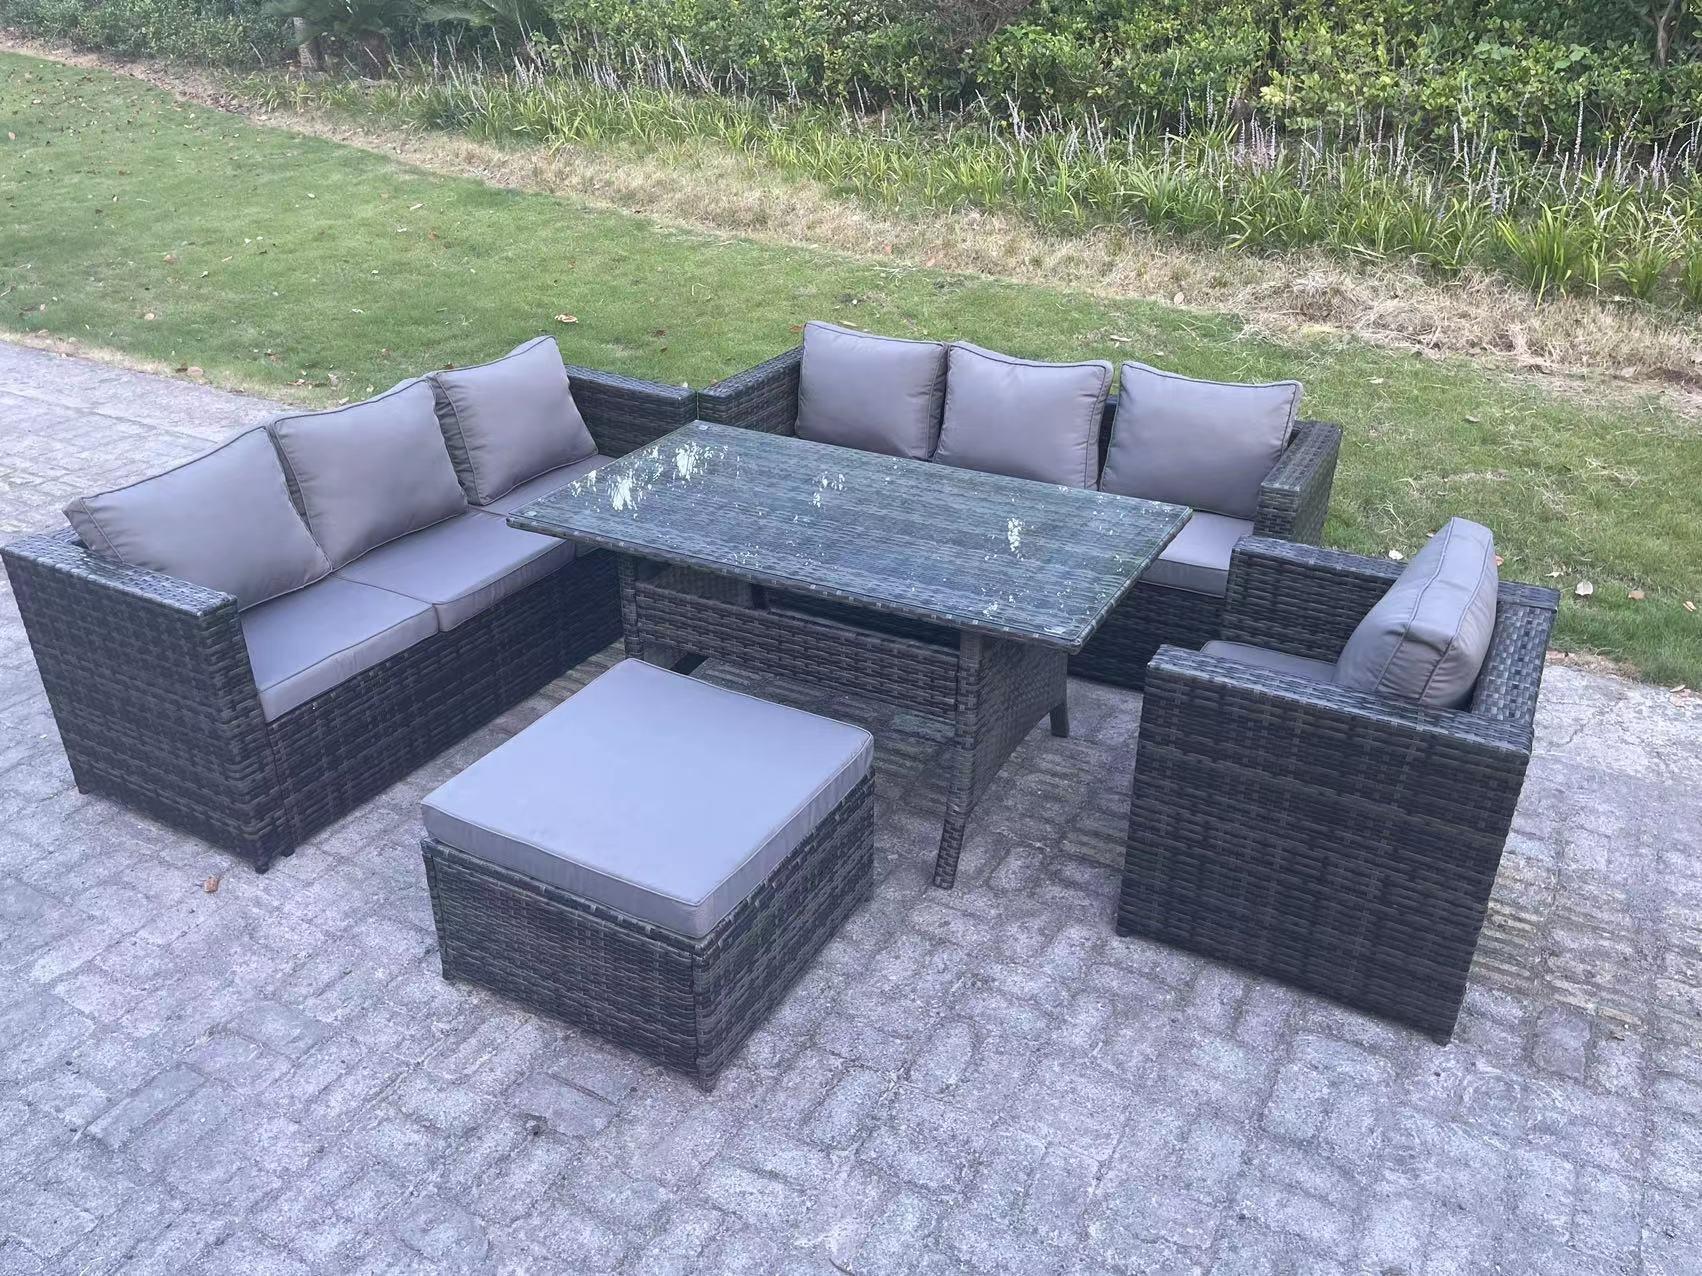 8 Seater Outdoor Lounge Sofa Garden Furniture Set Patio Rattan Rectangular Dining Table Chair